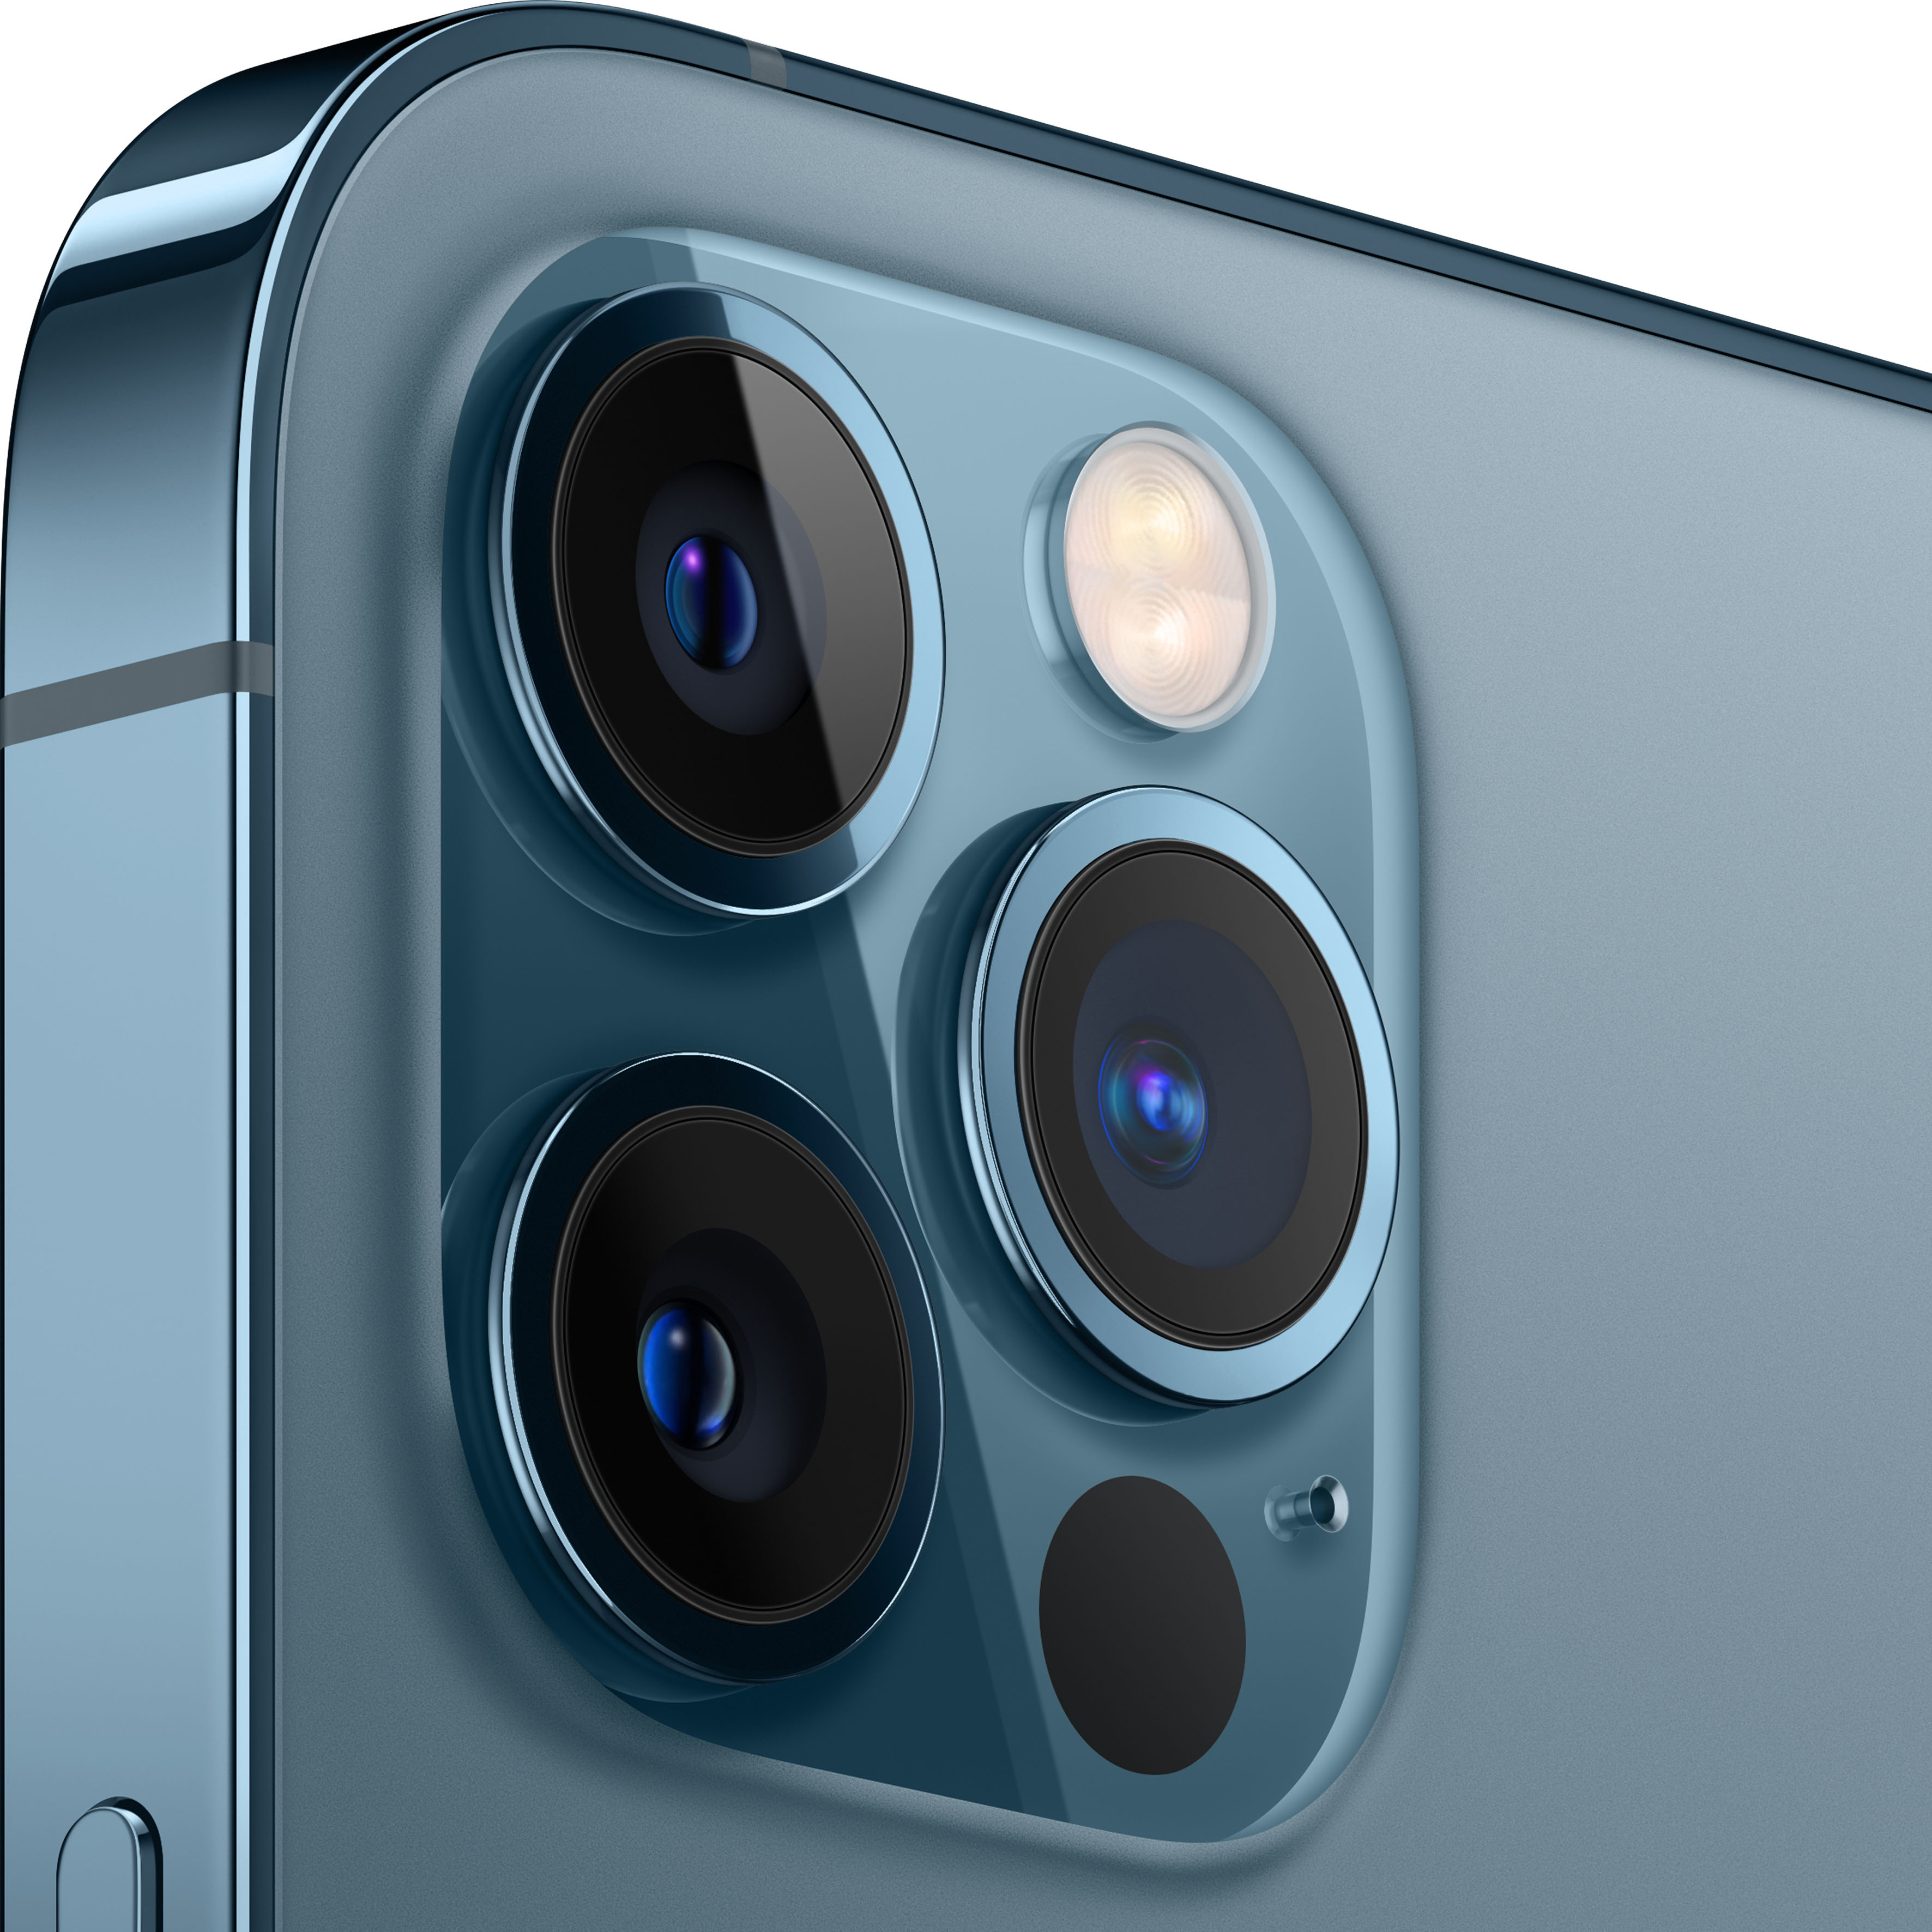 Apple iPhone 12 Pro 128GB (тихоокеанский синий)